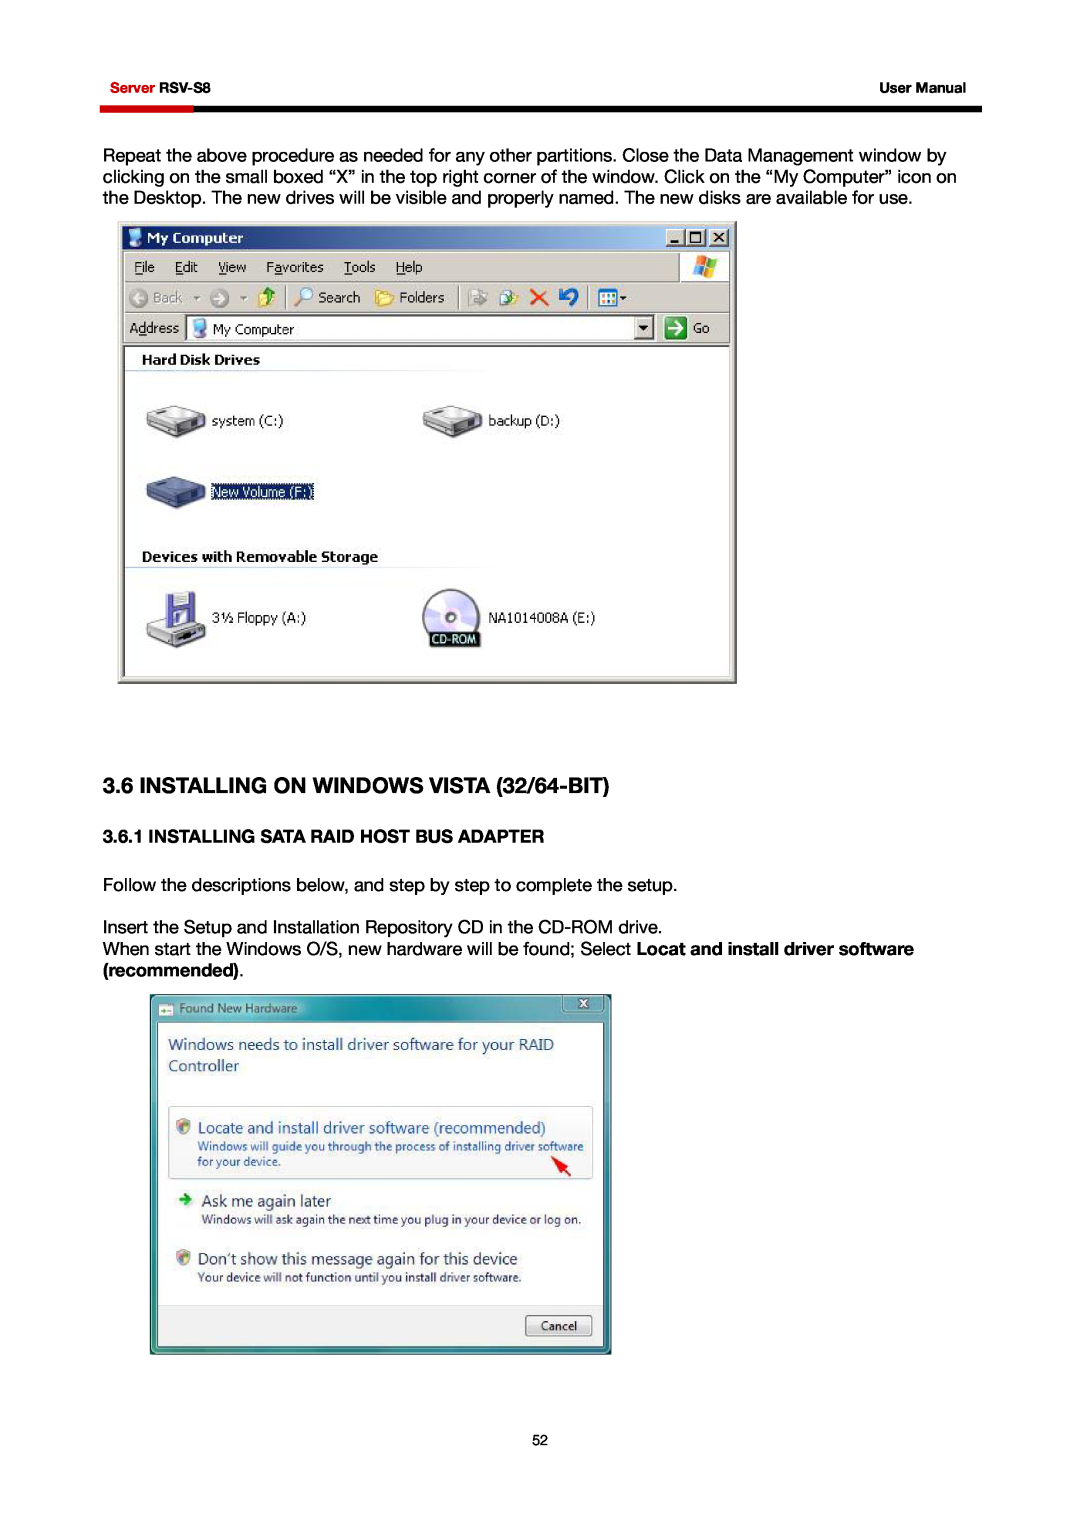 Rosewill RSV-S8 user manual INSTALLING ON WINDOWS VISTA 32/64-BIT, Installing Sata Raid Host Bus Adapter 